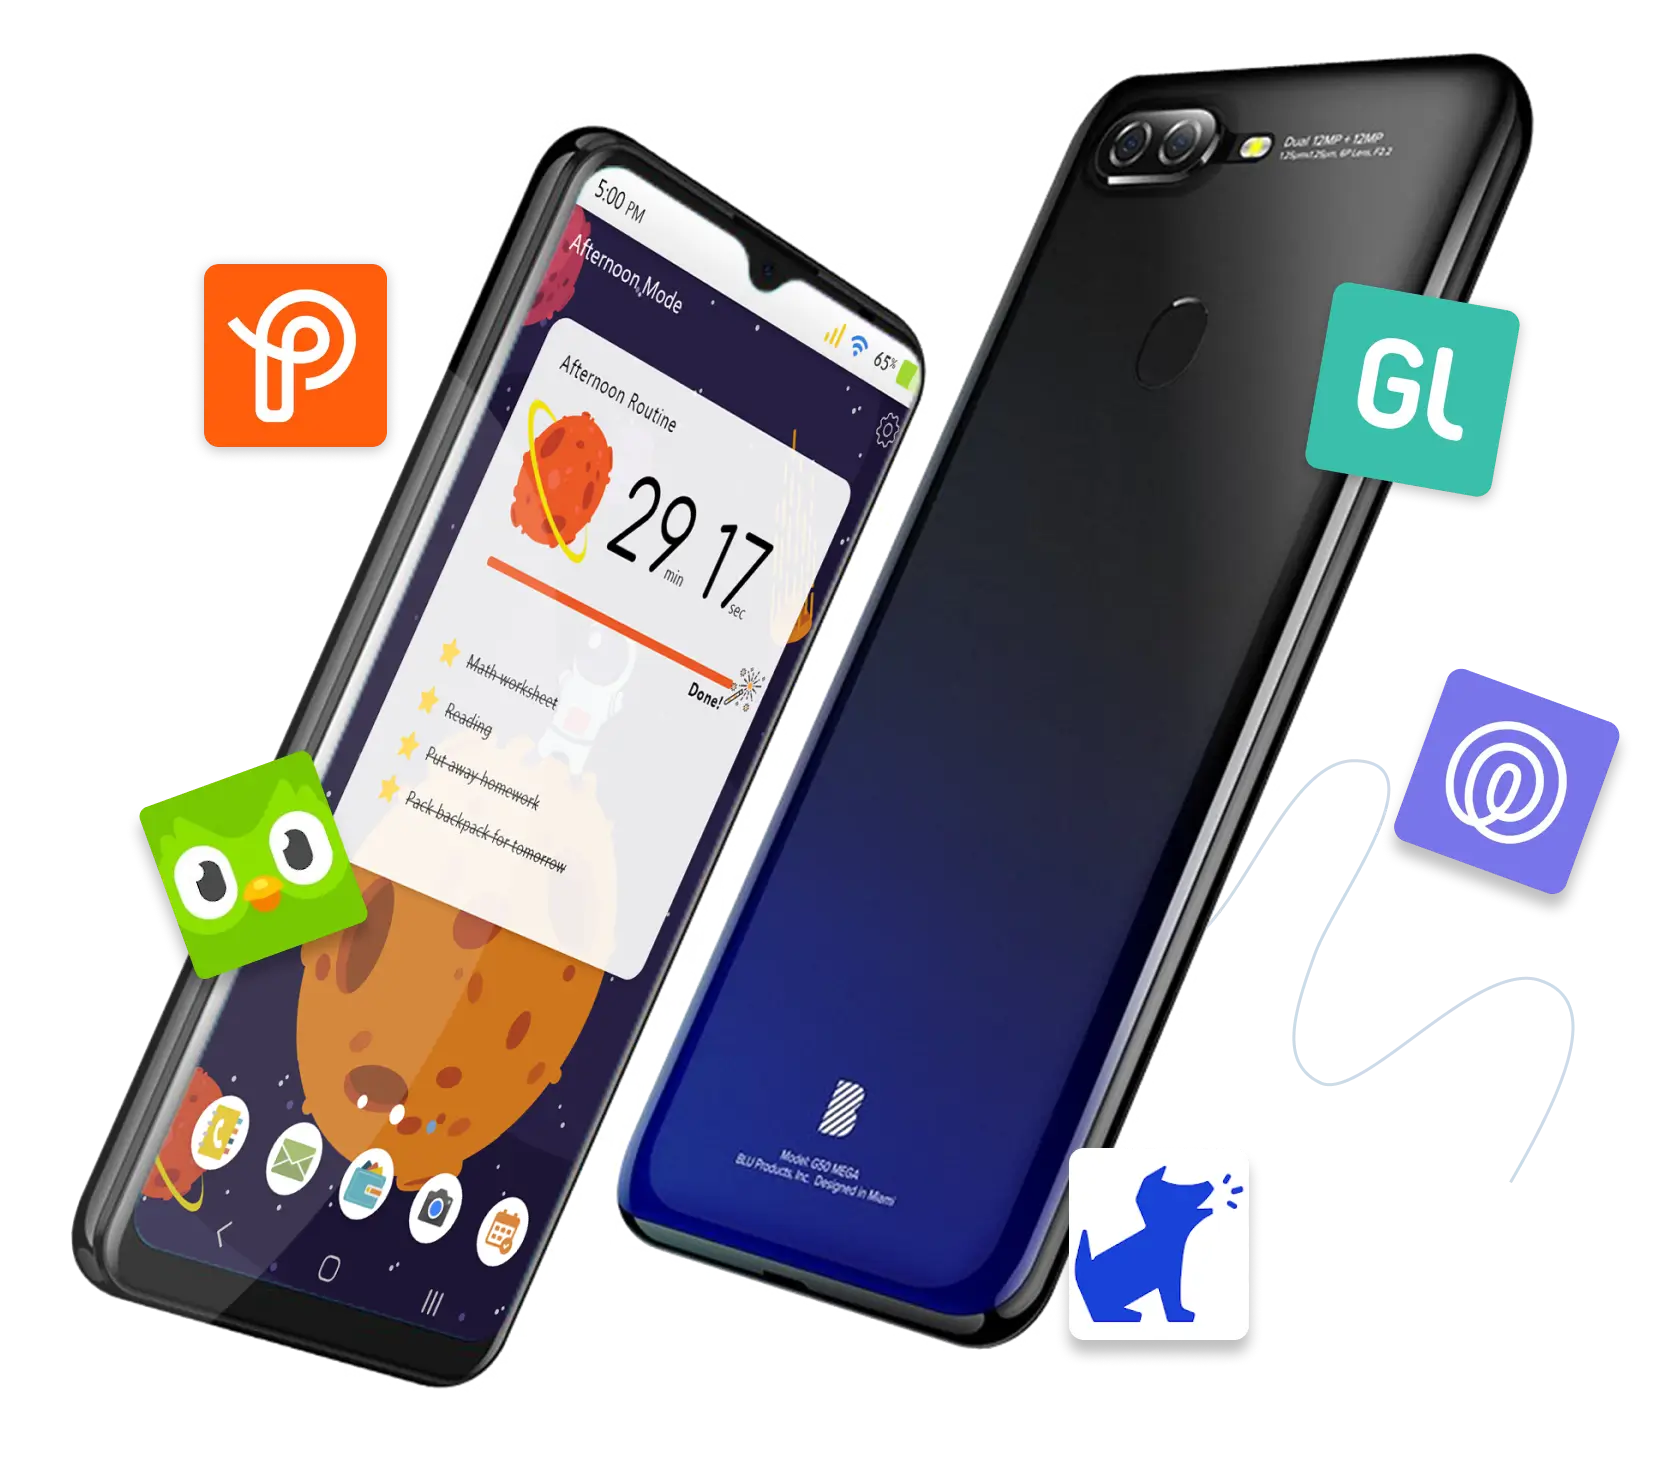 Pinwheel Slim Phone With Apps Icons Floating Around It